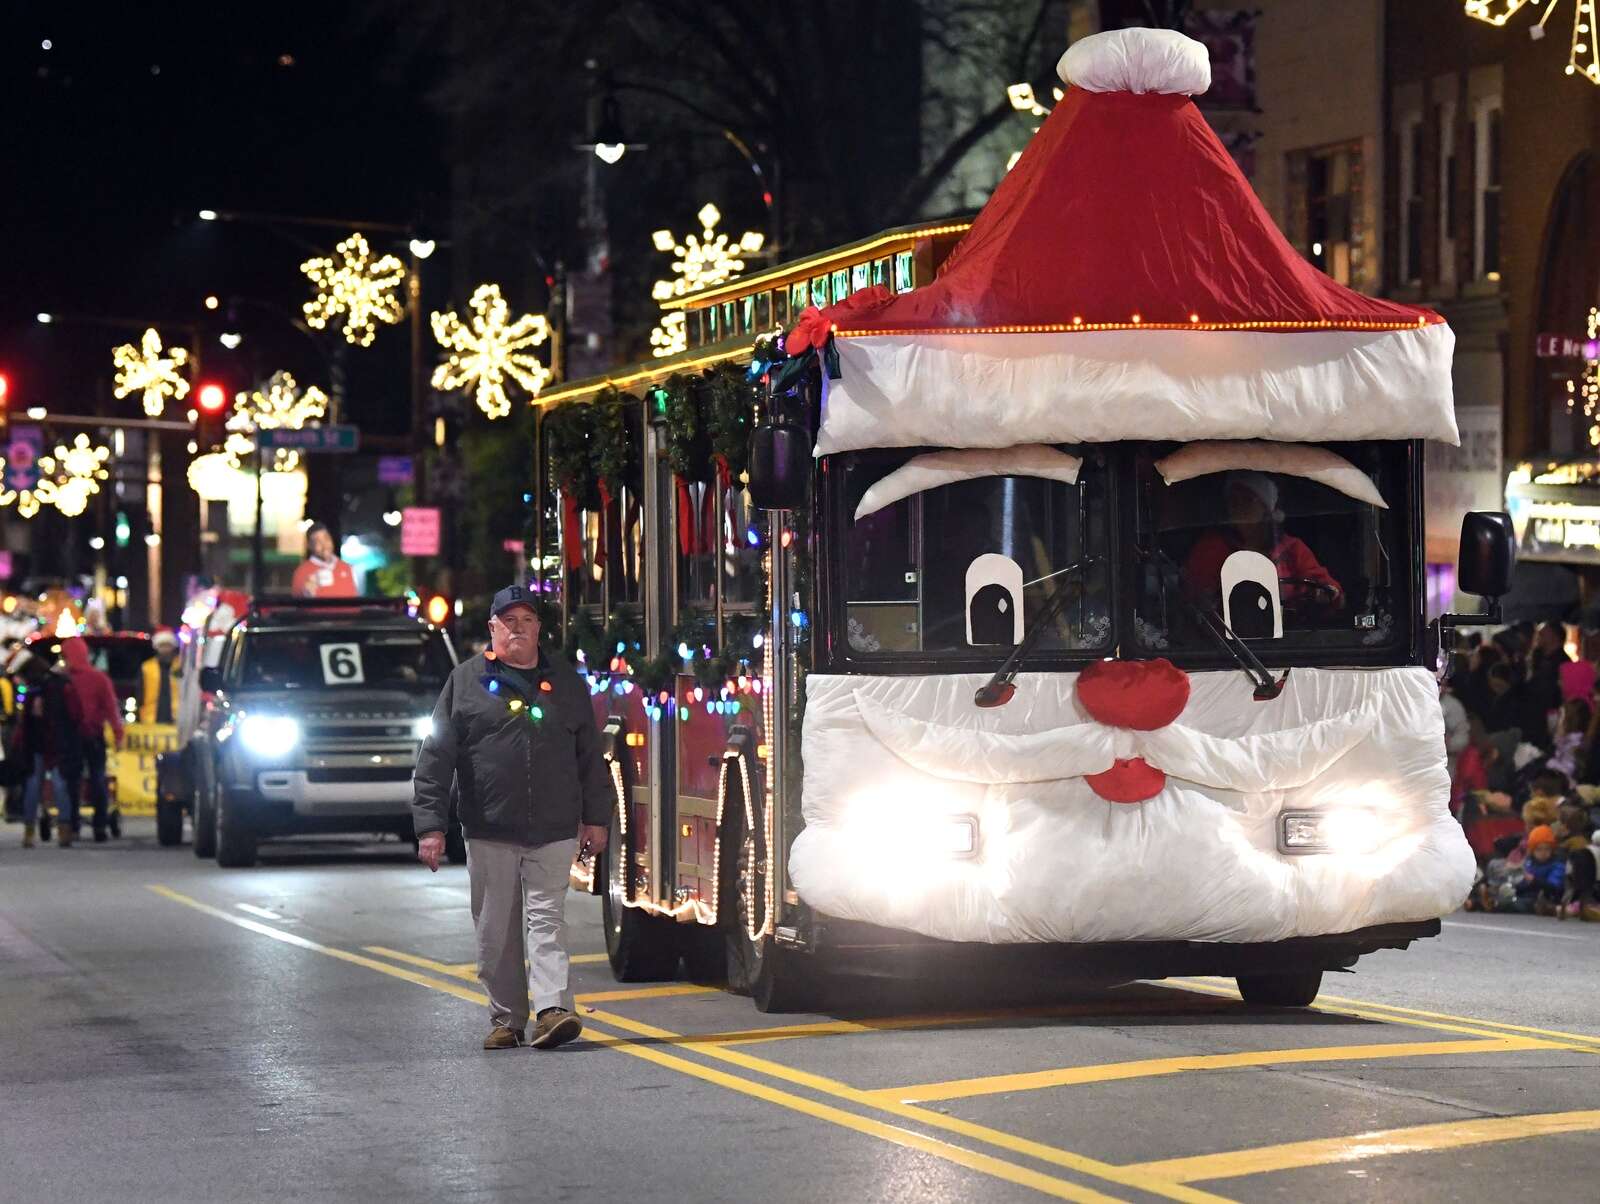 The Butler Transit Authority Santa bus